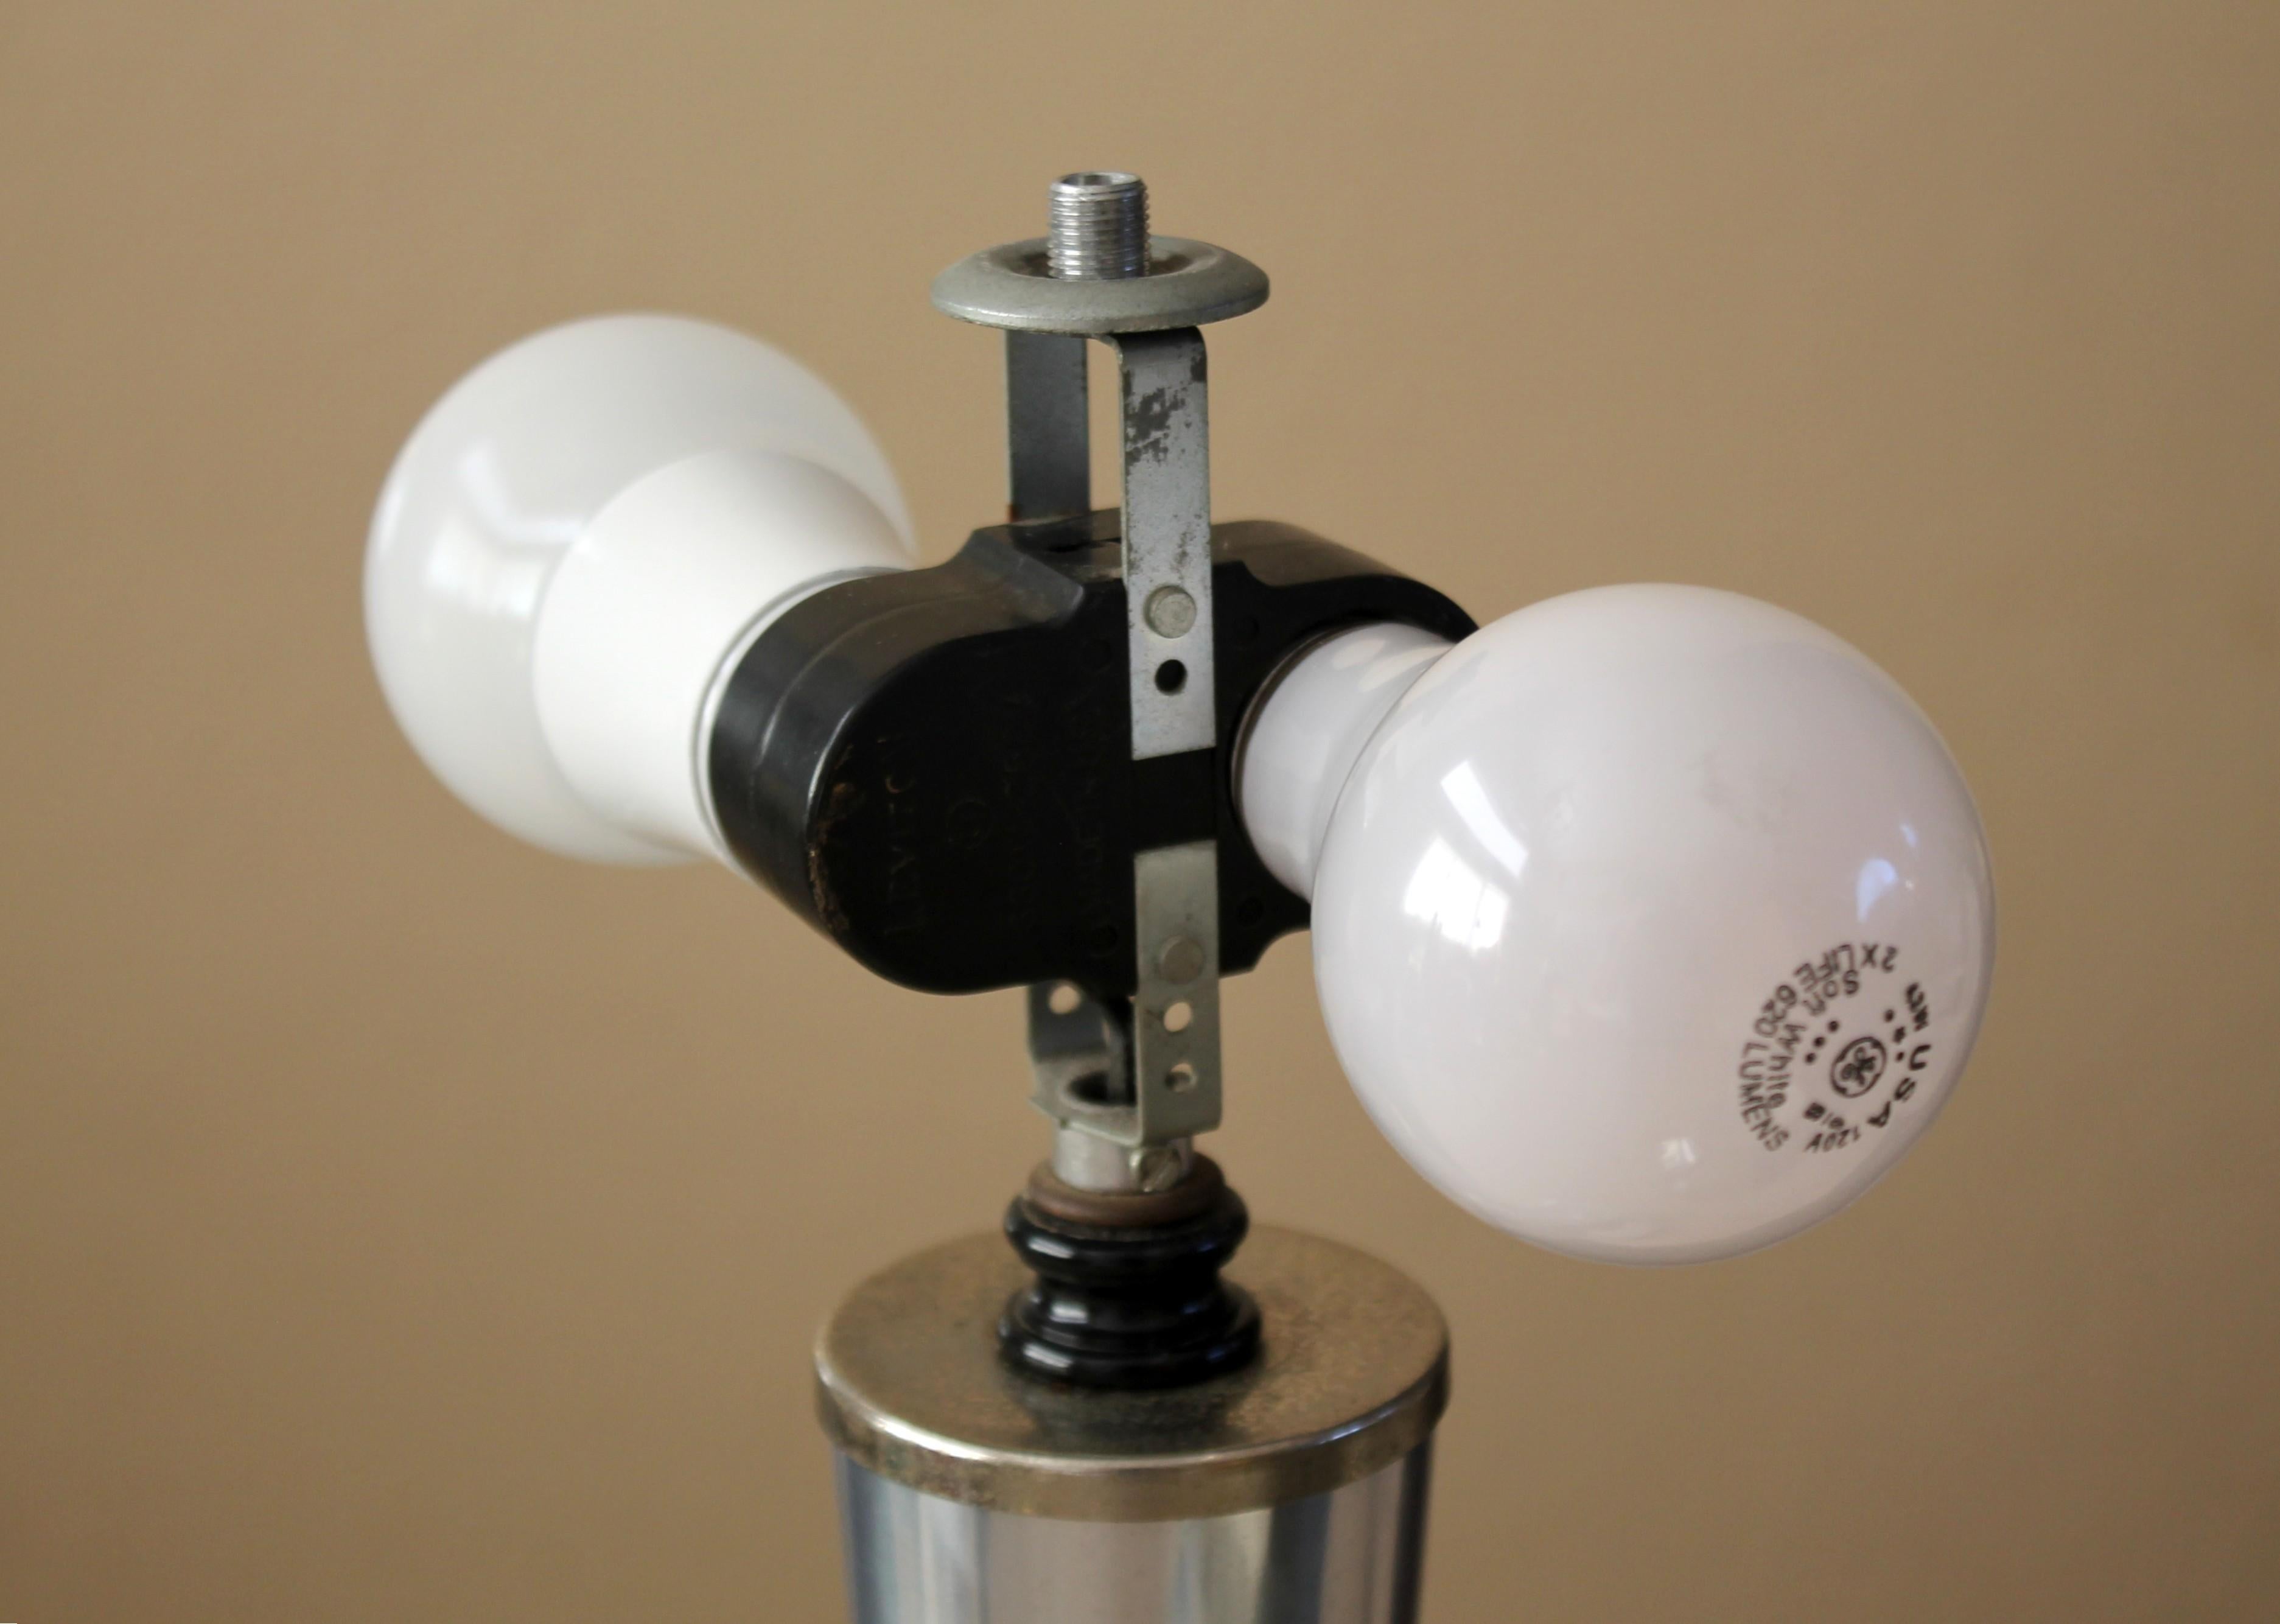 Mid Century Aluminum Table Reflector Lamp Shade Poul Henningsen Danish Design For Sale 1